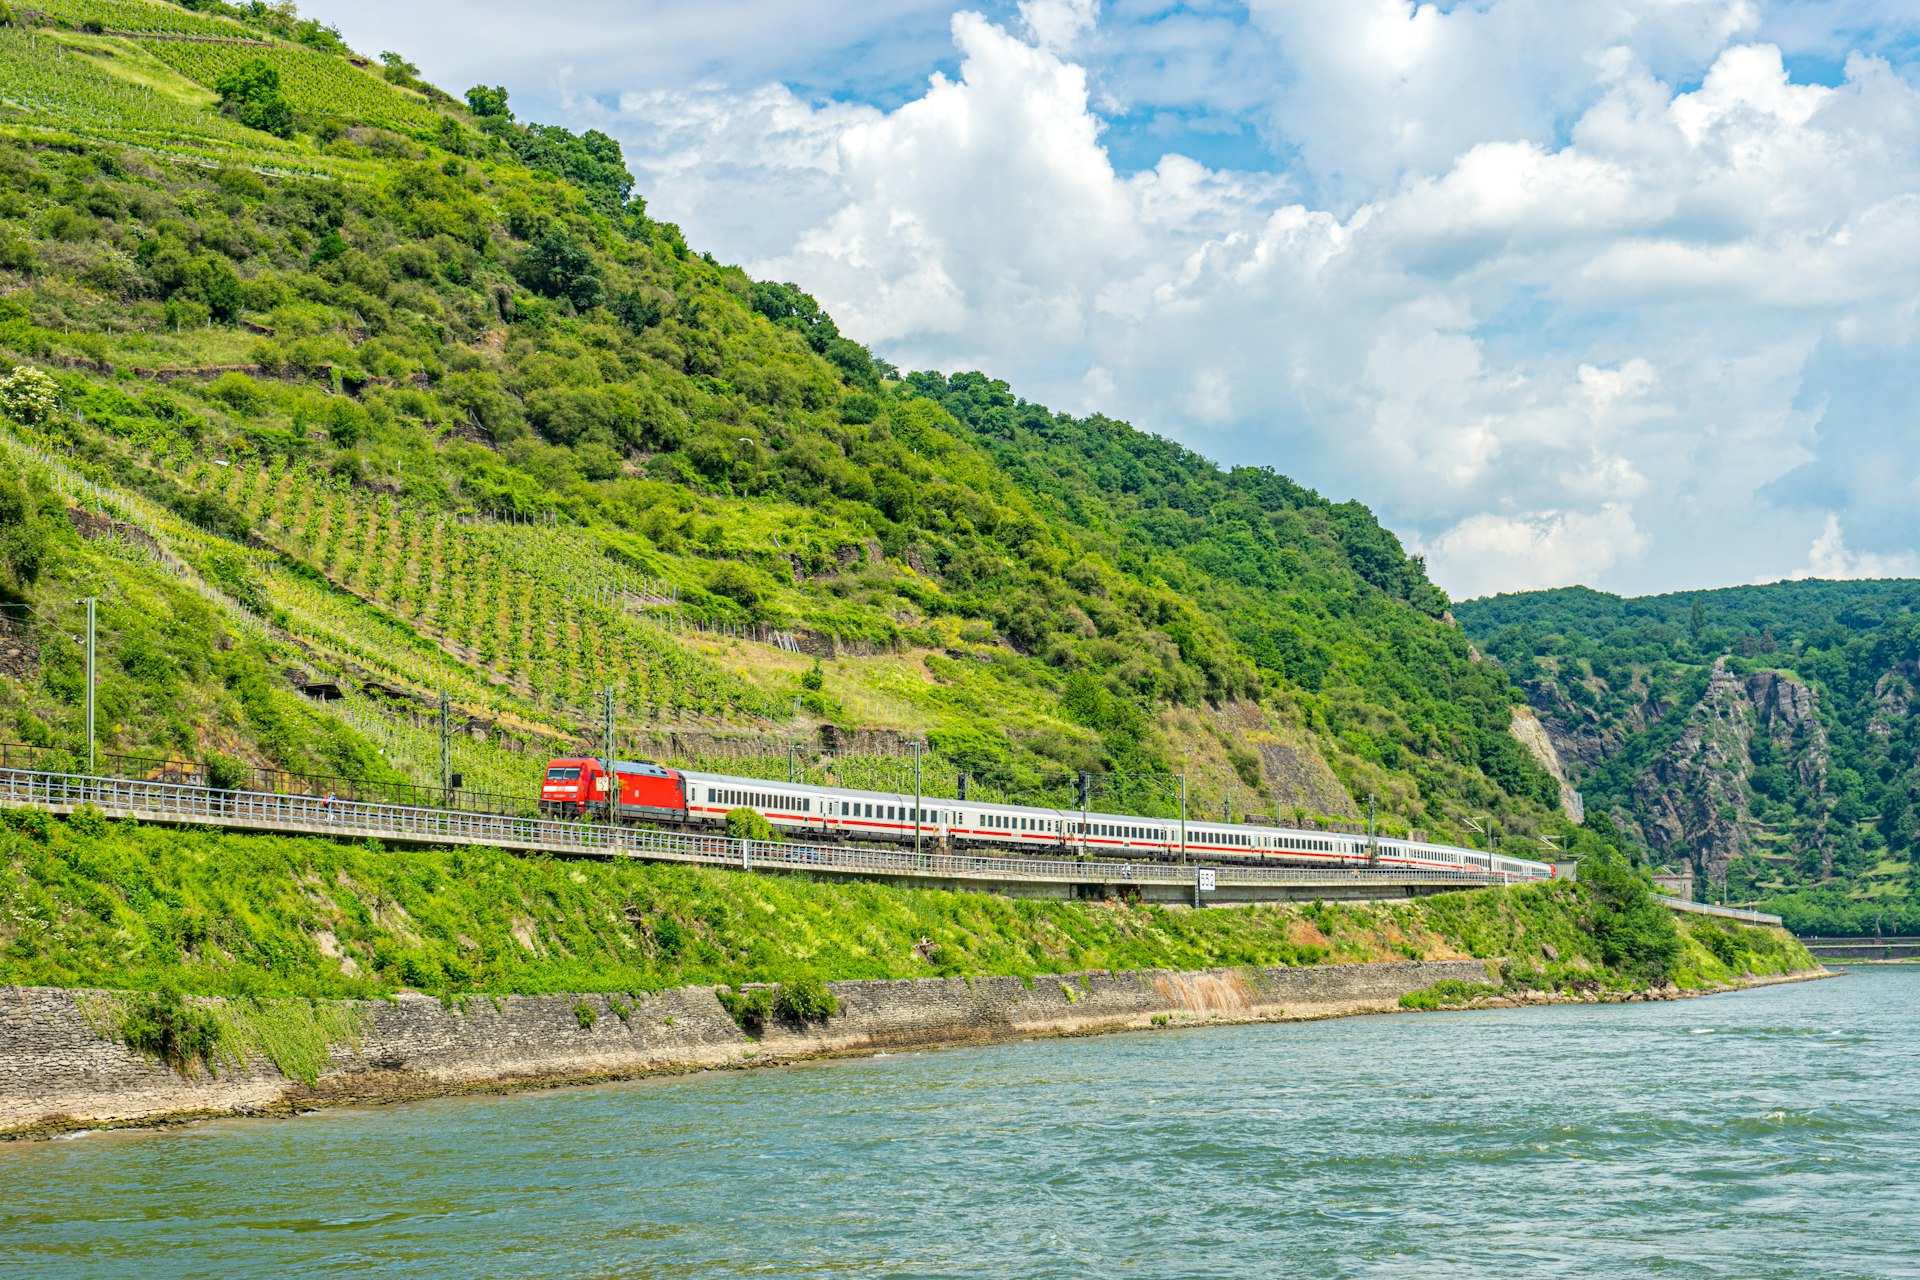 A red Deutsche Bahn railway train cuts between the wine terraced hills of the Rhine Valley in Germany